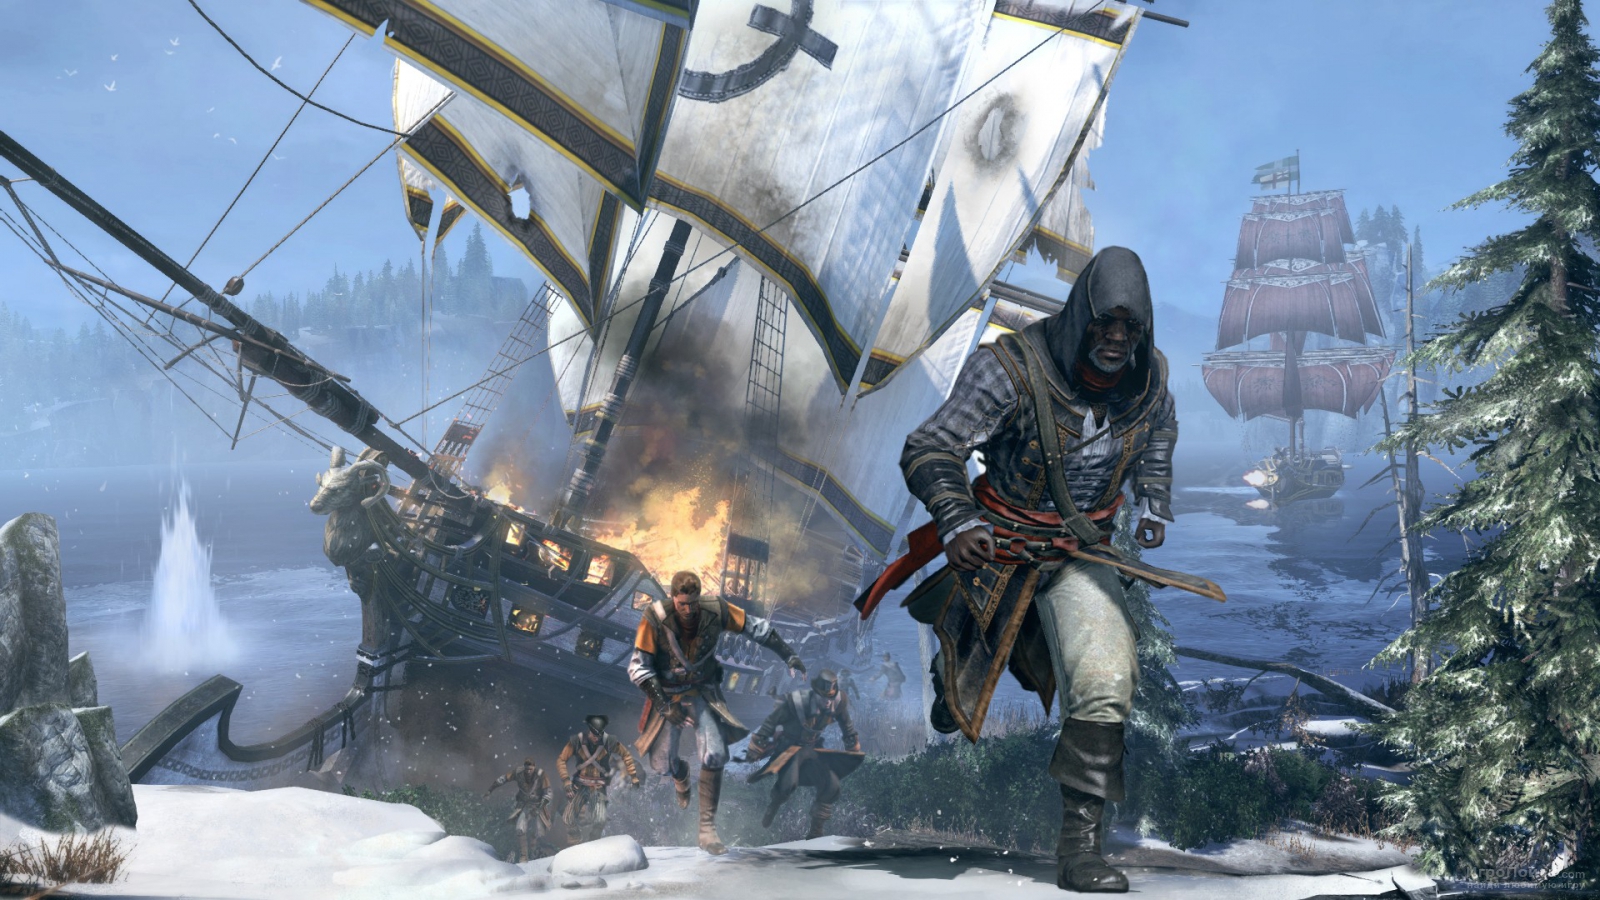 Скриншот к игре Assassin's Creed: Rogue